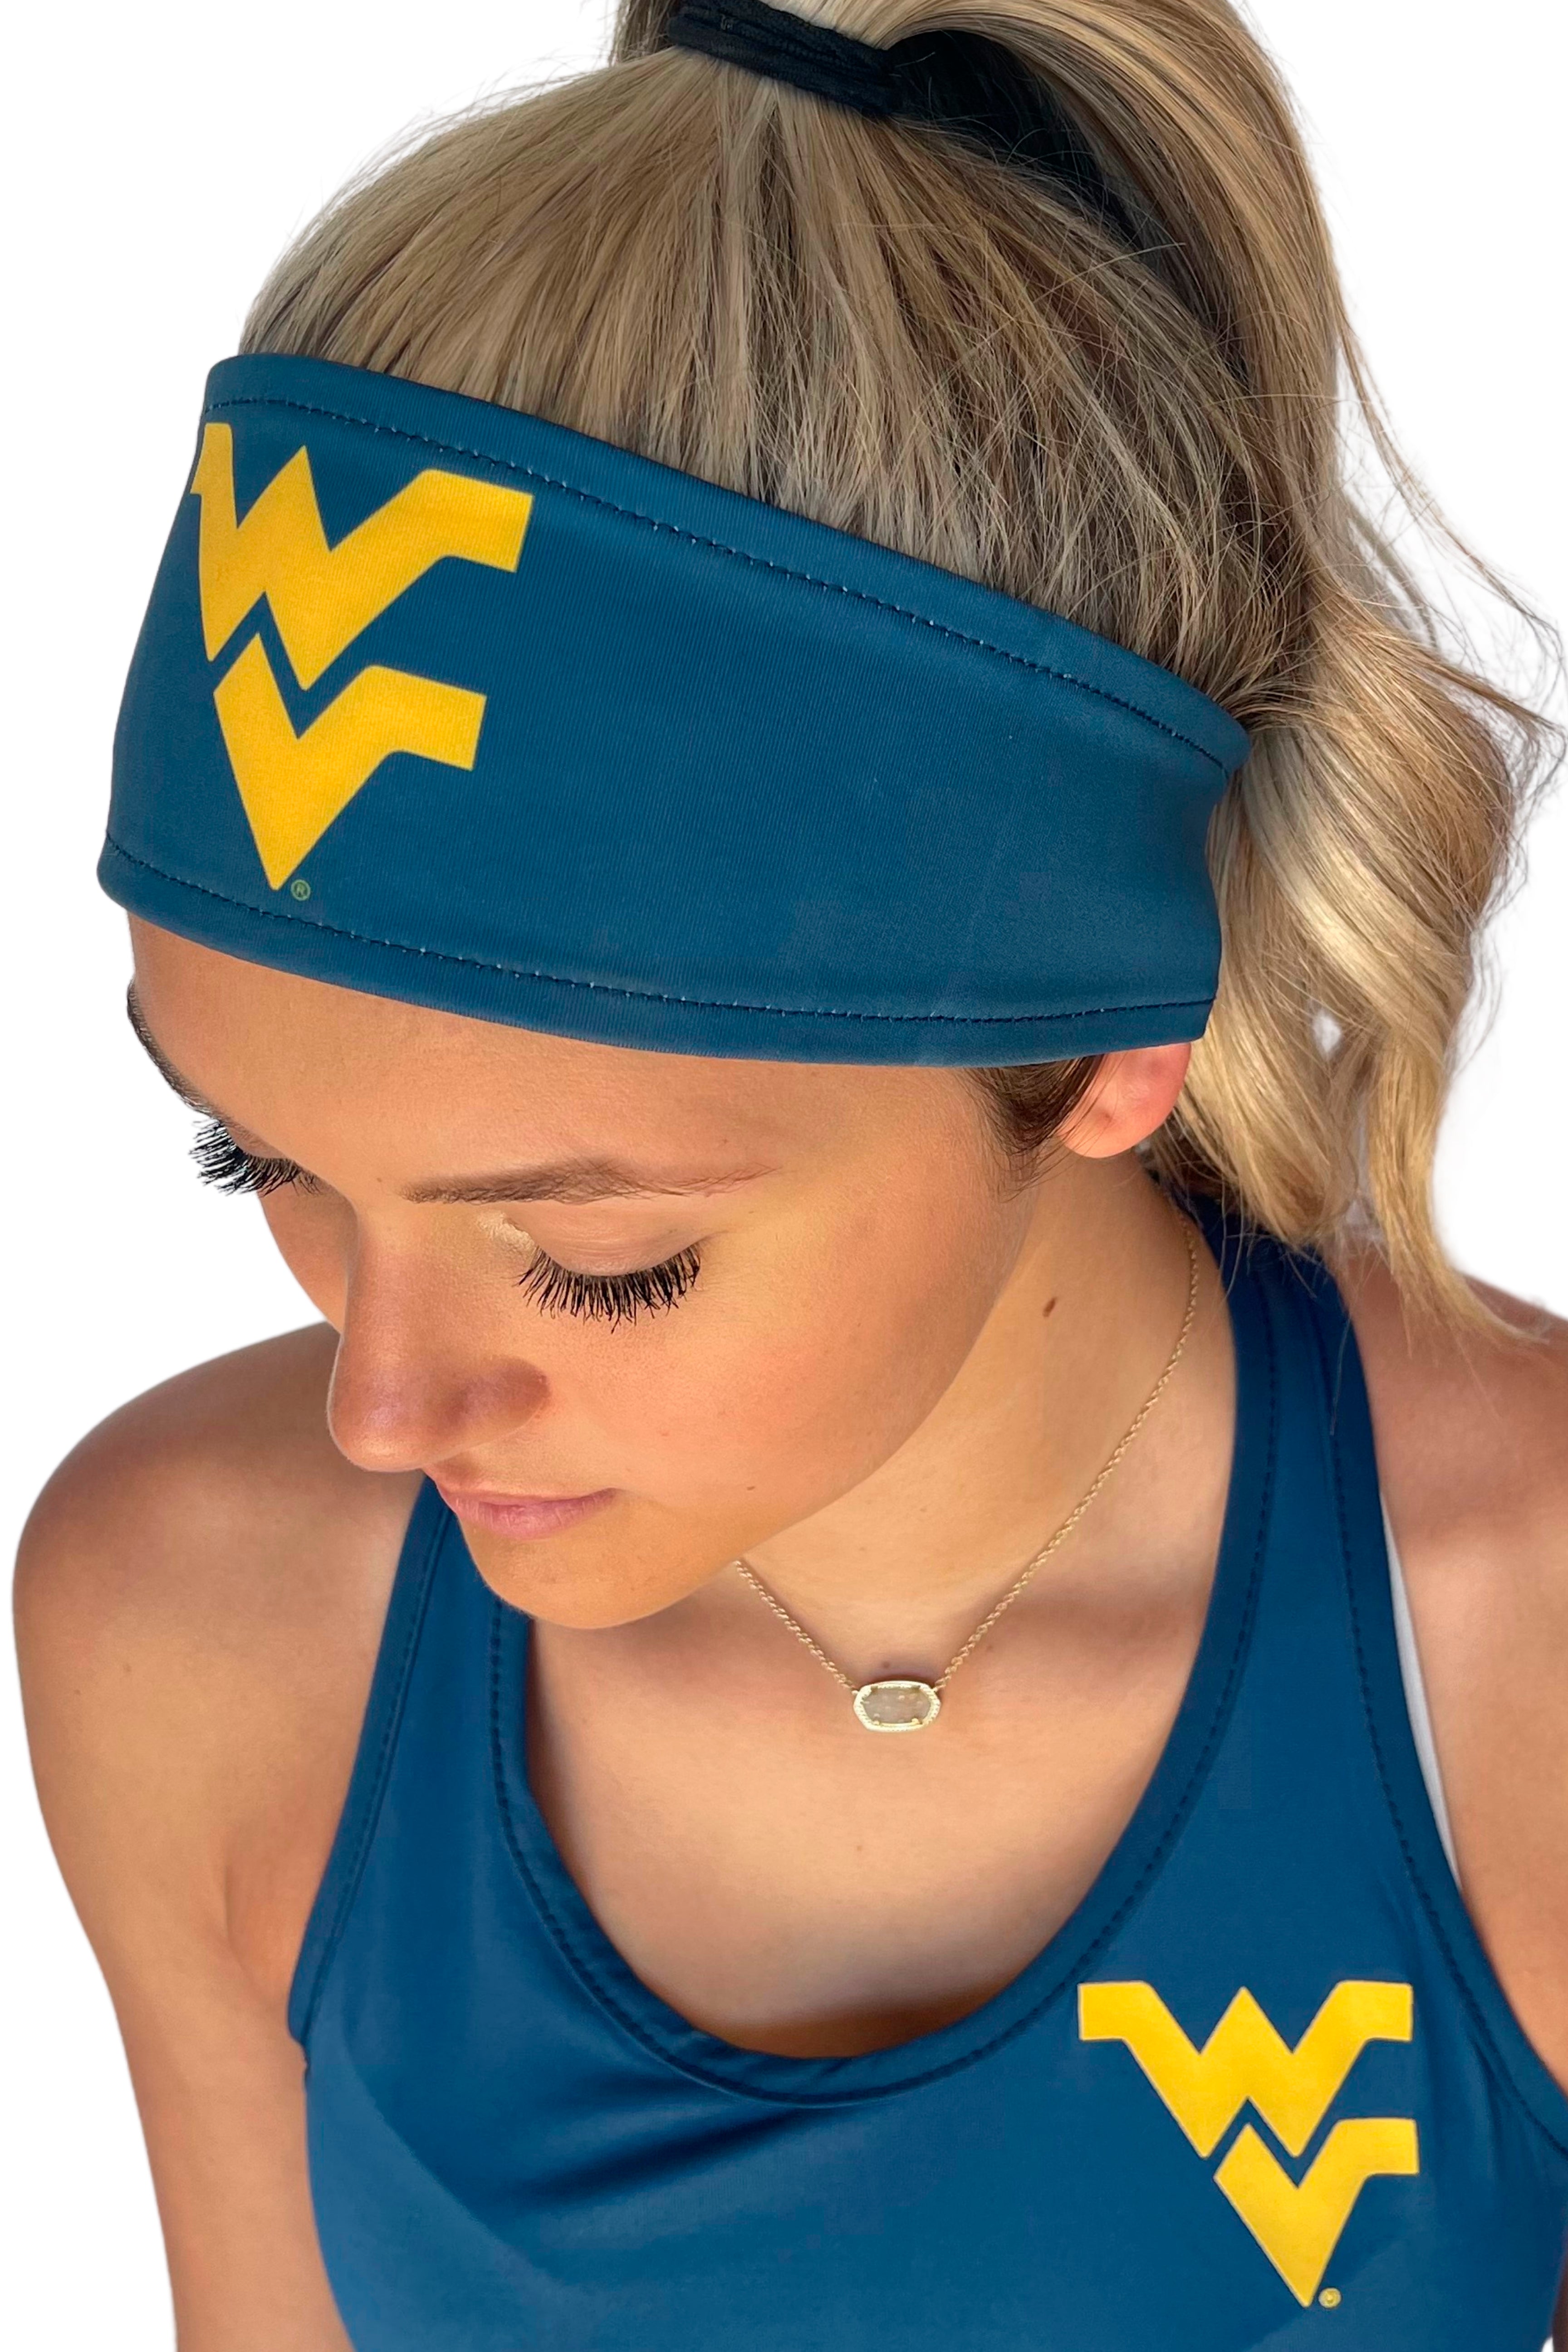 913 - West Virginia University Reversible Headband Navy w/Gold